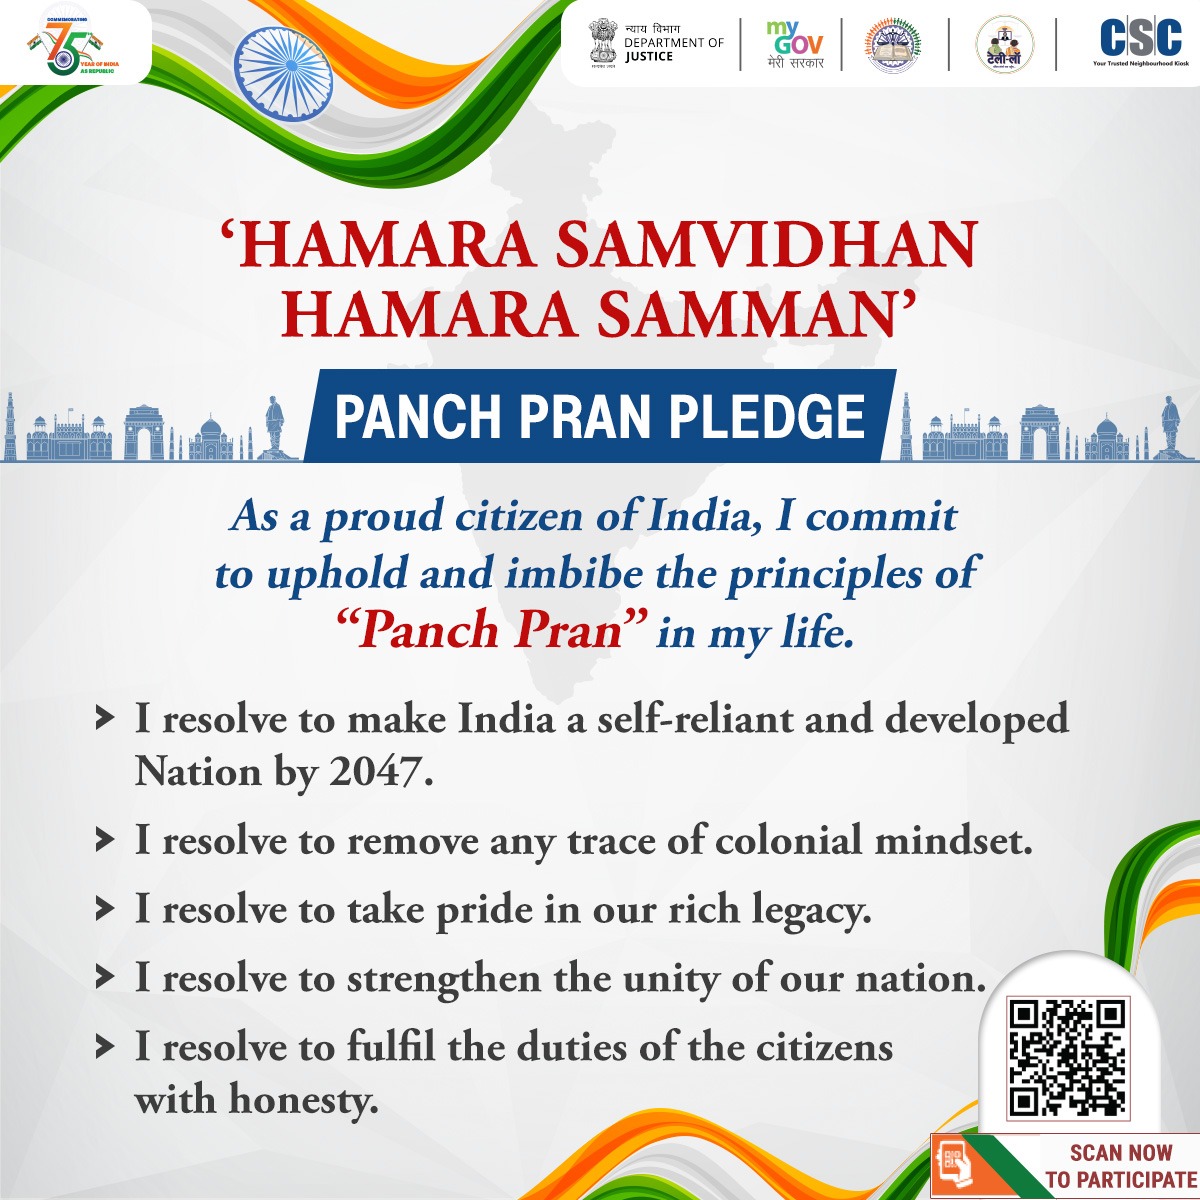 Let's participate in the #PanchPranPledge & commit to upholding and imbibing the principles in our lives for the nation.

To participate, visit: pledge.mygov.in/panch-pran/

#AmritKaal #PanchPran #NewIndia #DigitalIndia #HamaraSamvidhanHamaraSamman #HamaraSankalpViksitBharat #MyGov